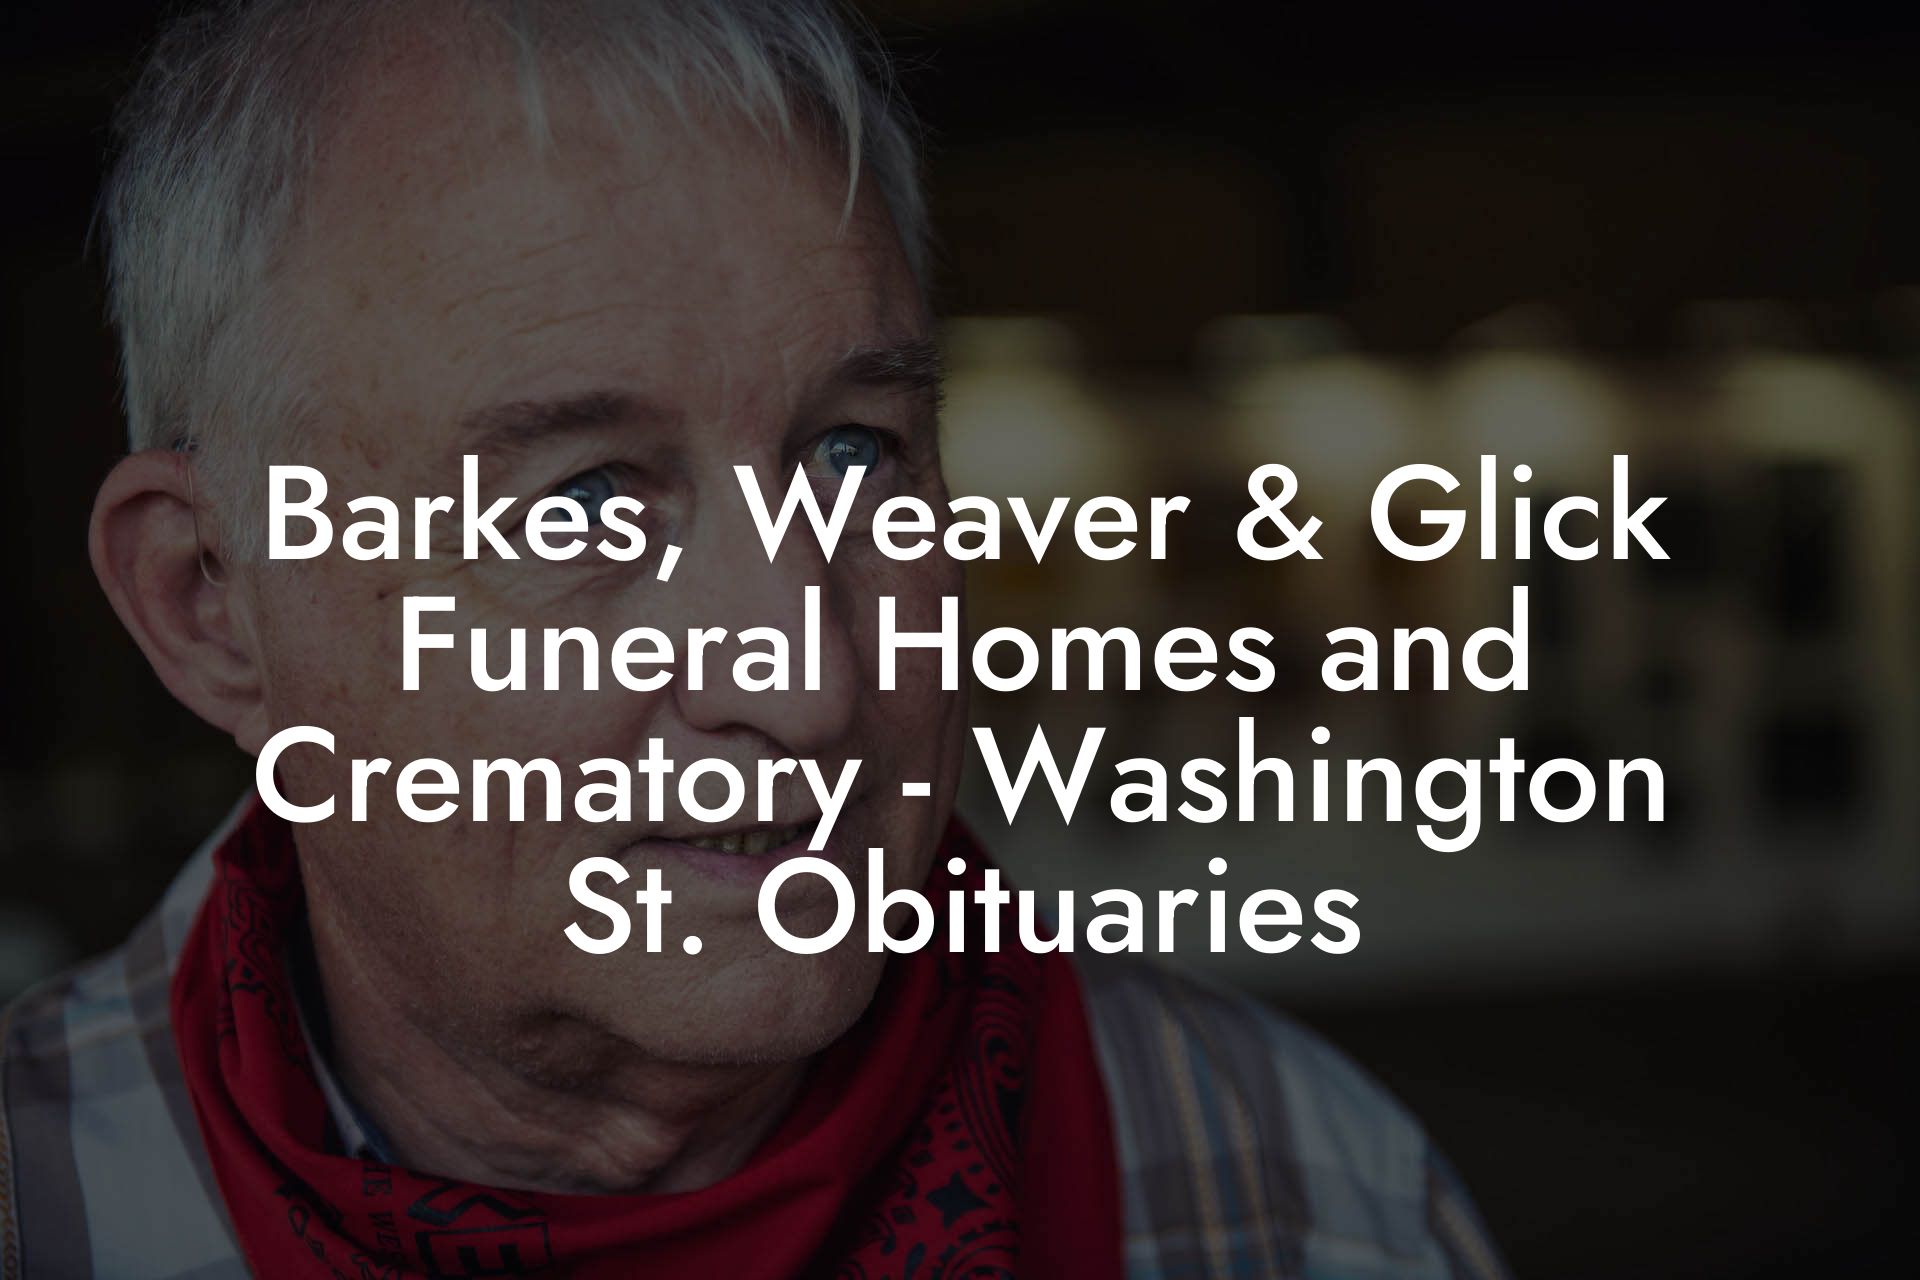 Barkes, Weaver & Glick Funeral Homes and Crematory - Washington St. Obituaries